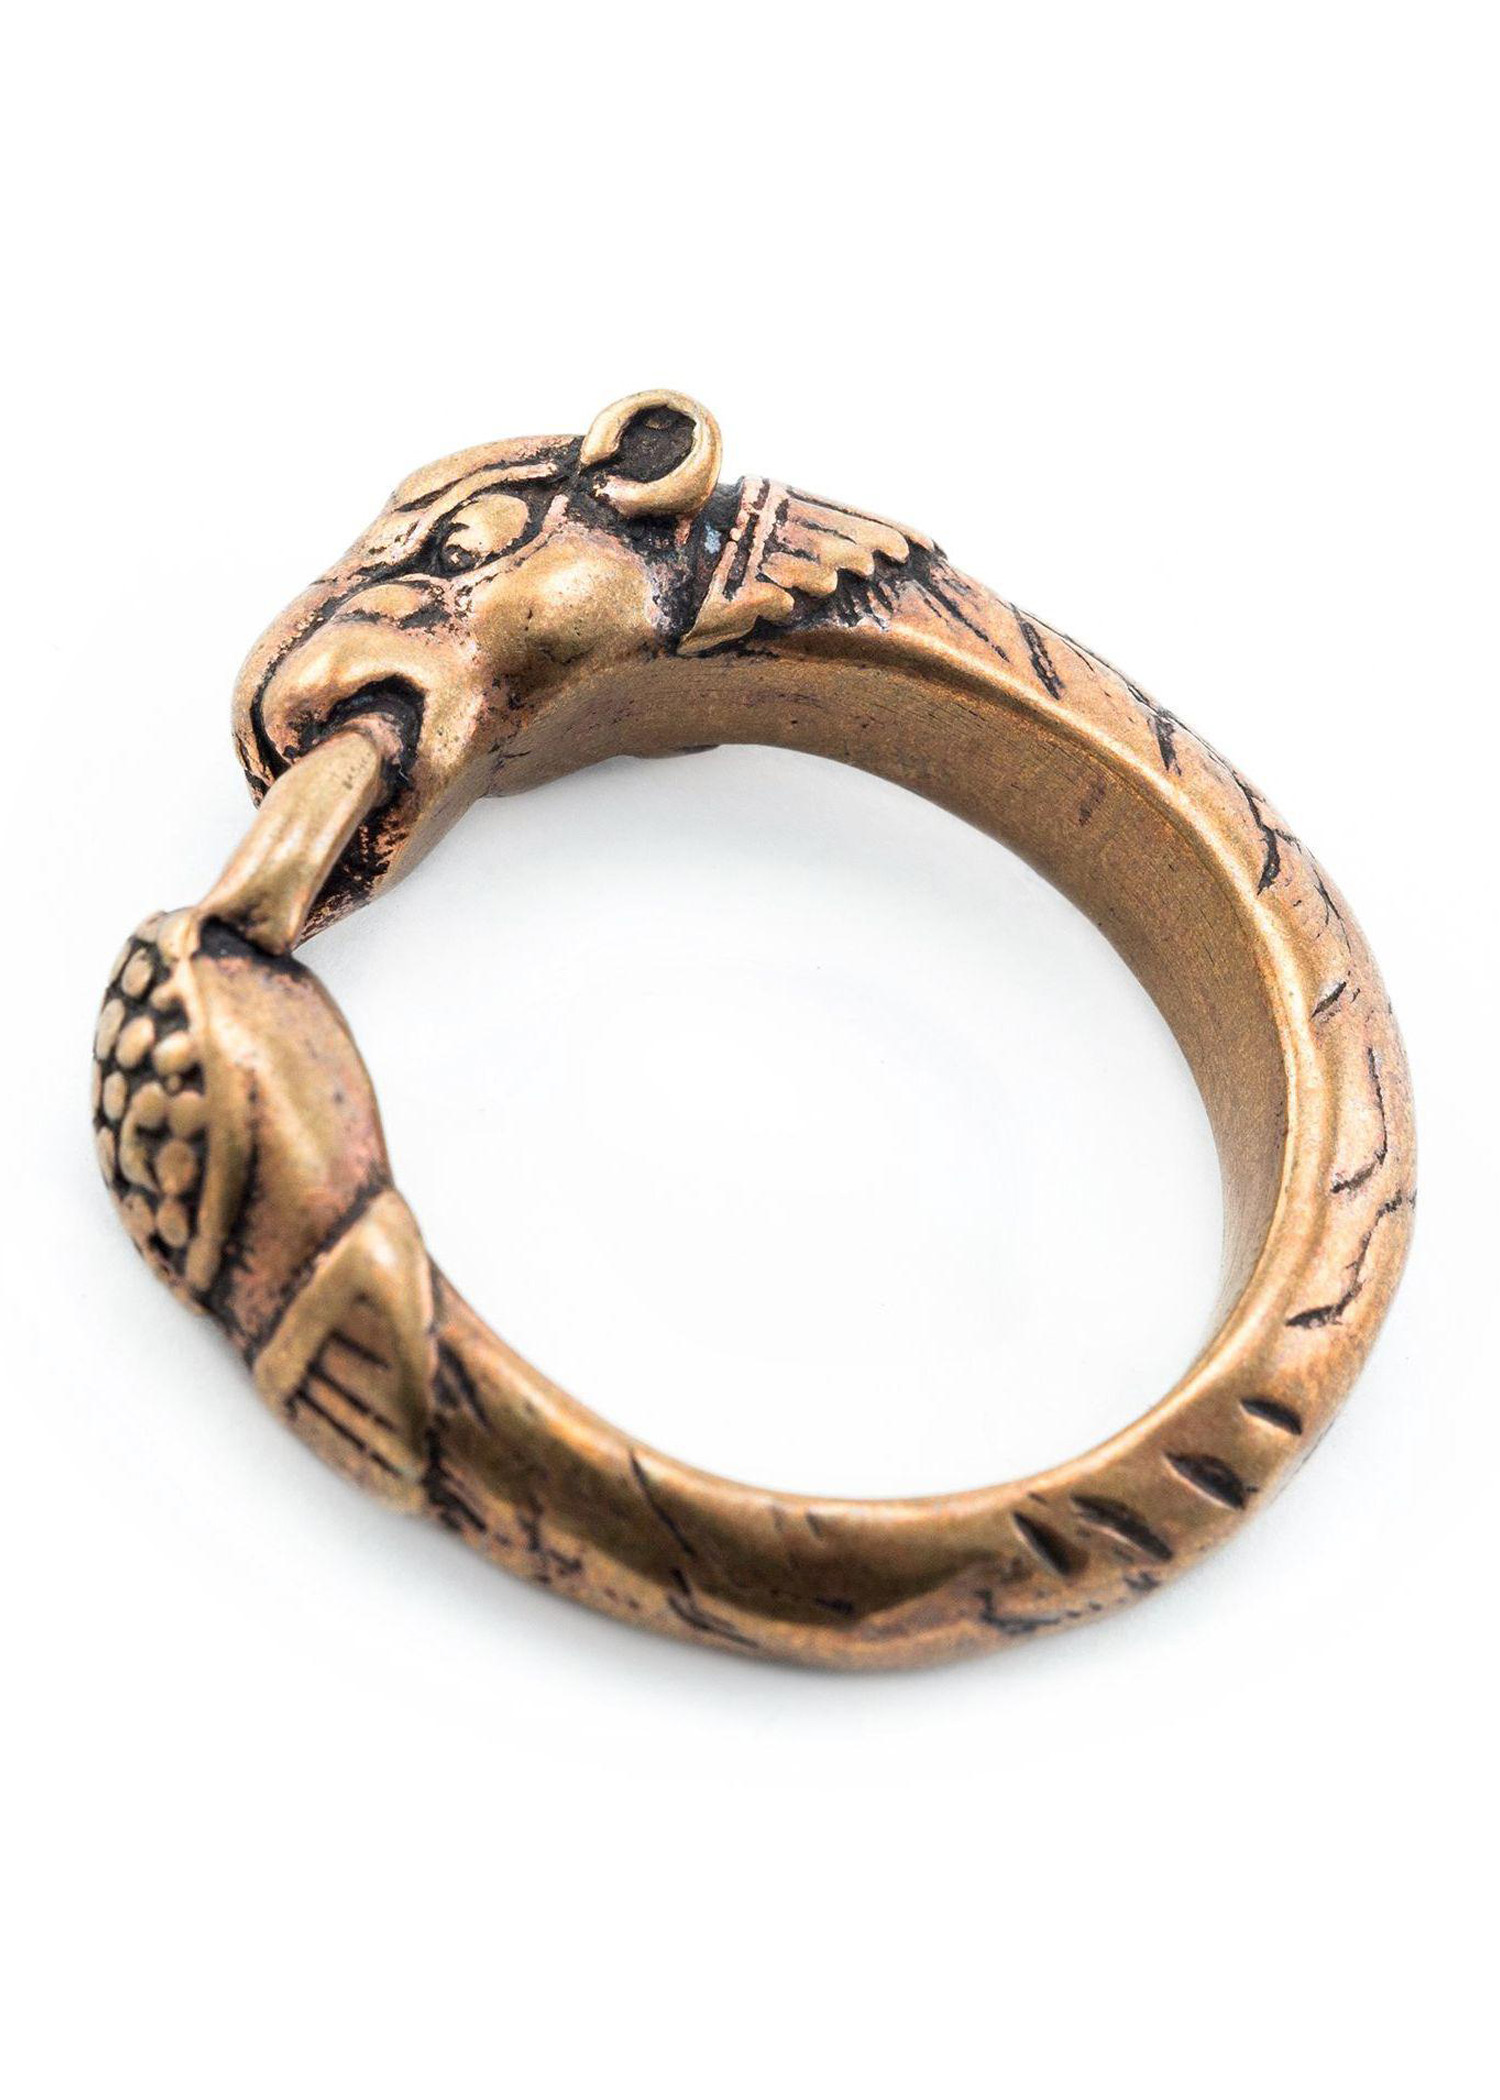 Wikinger Ring mit Hundekopf, Bronze, Ringgröße 18/56